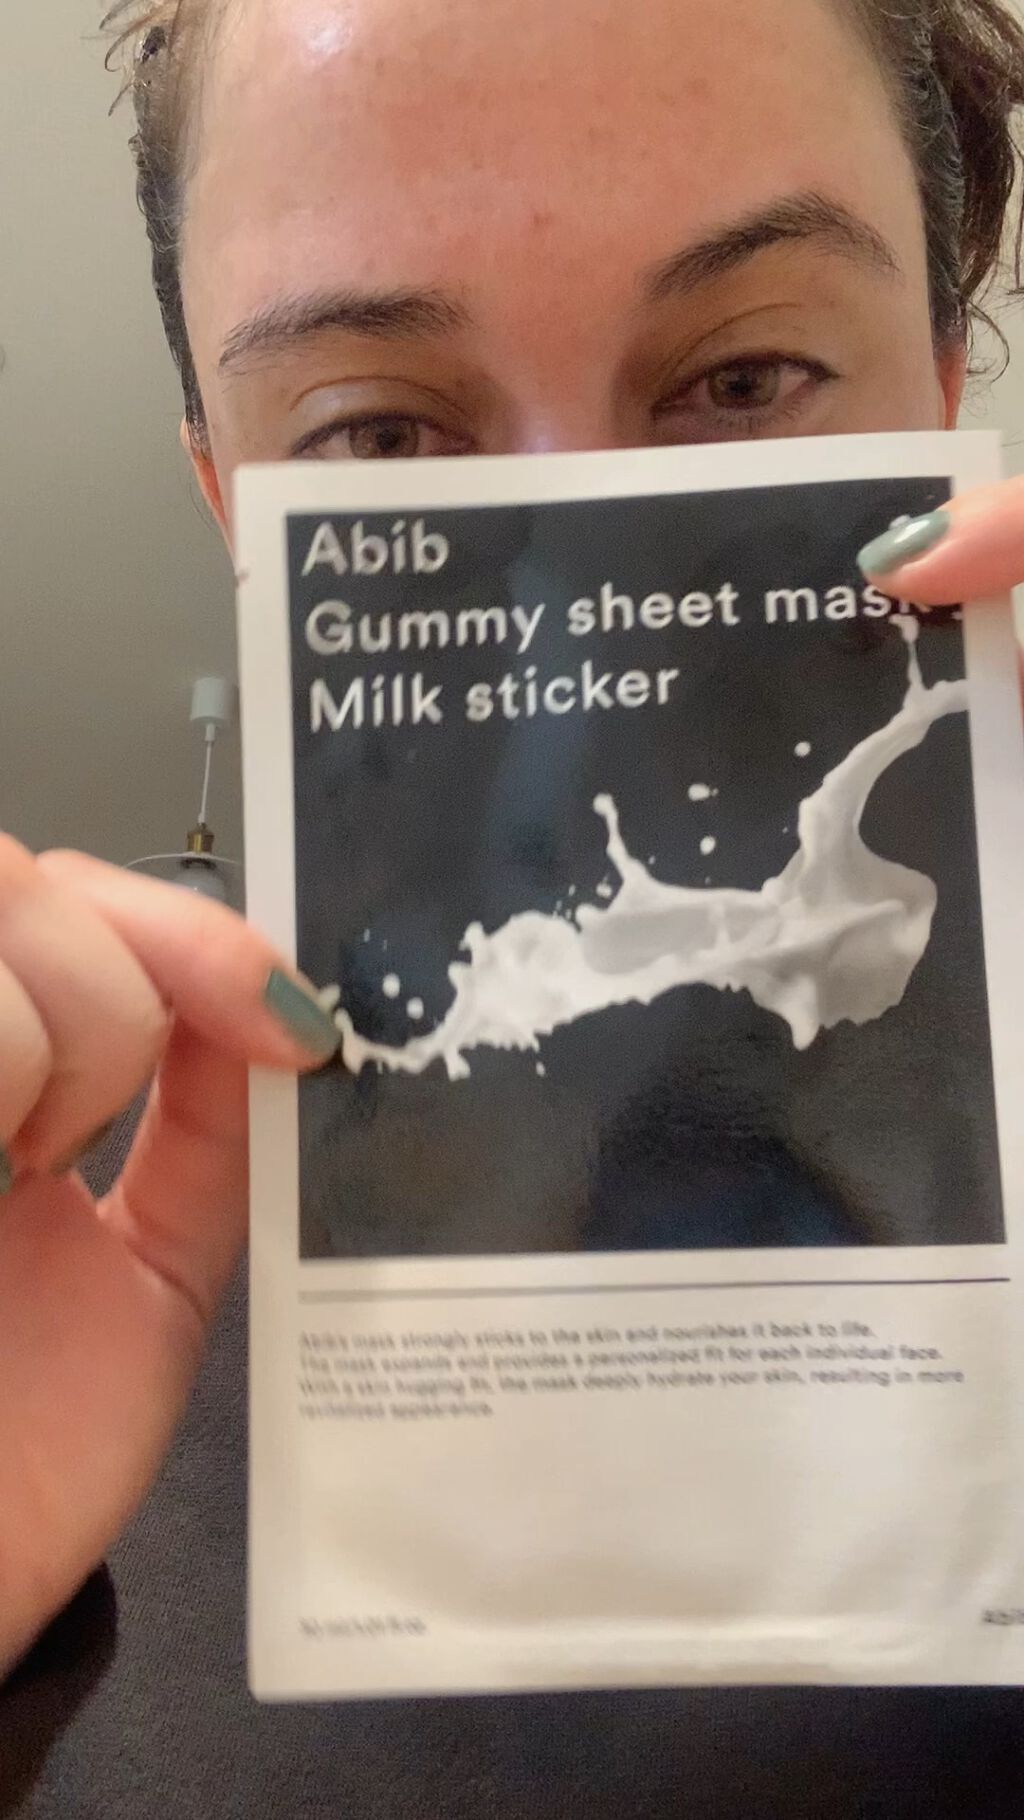 Gummy sheet mask Milk sticker/Abib /シートマスク・パックの動画クチコミ3つ目